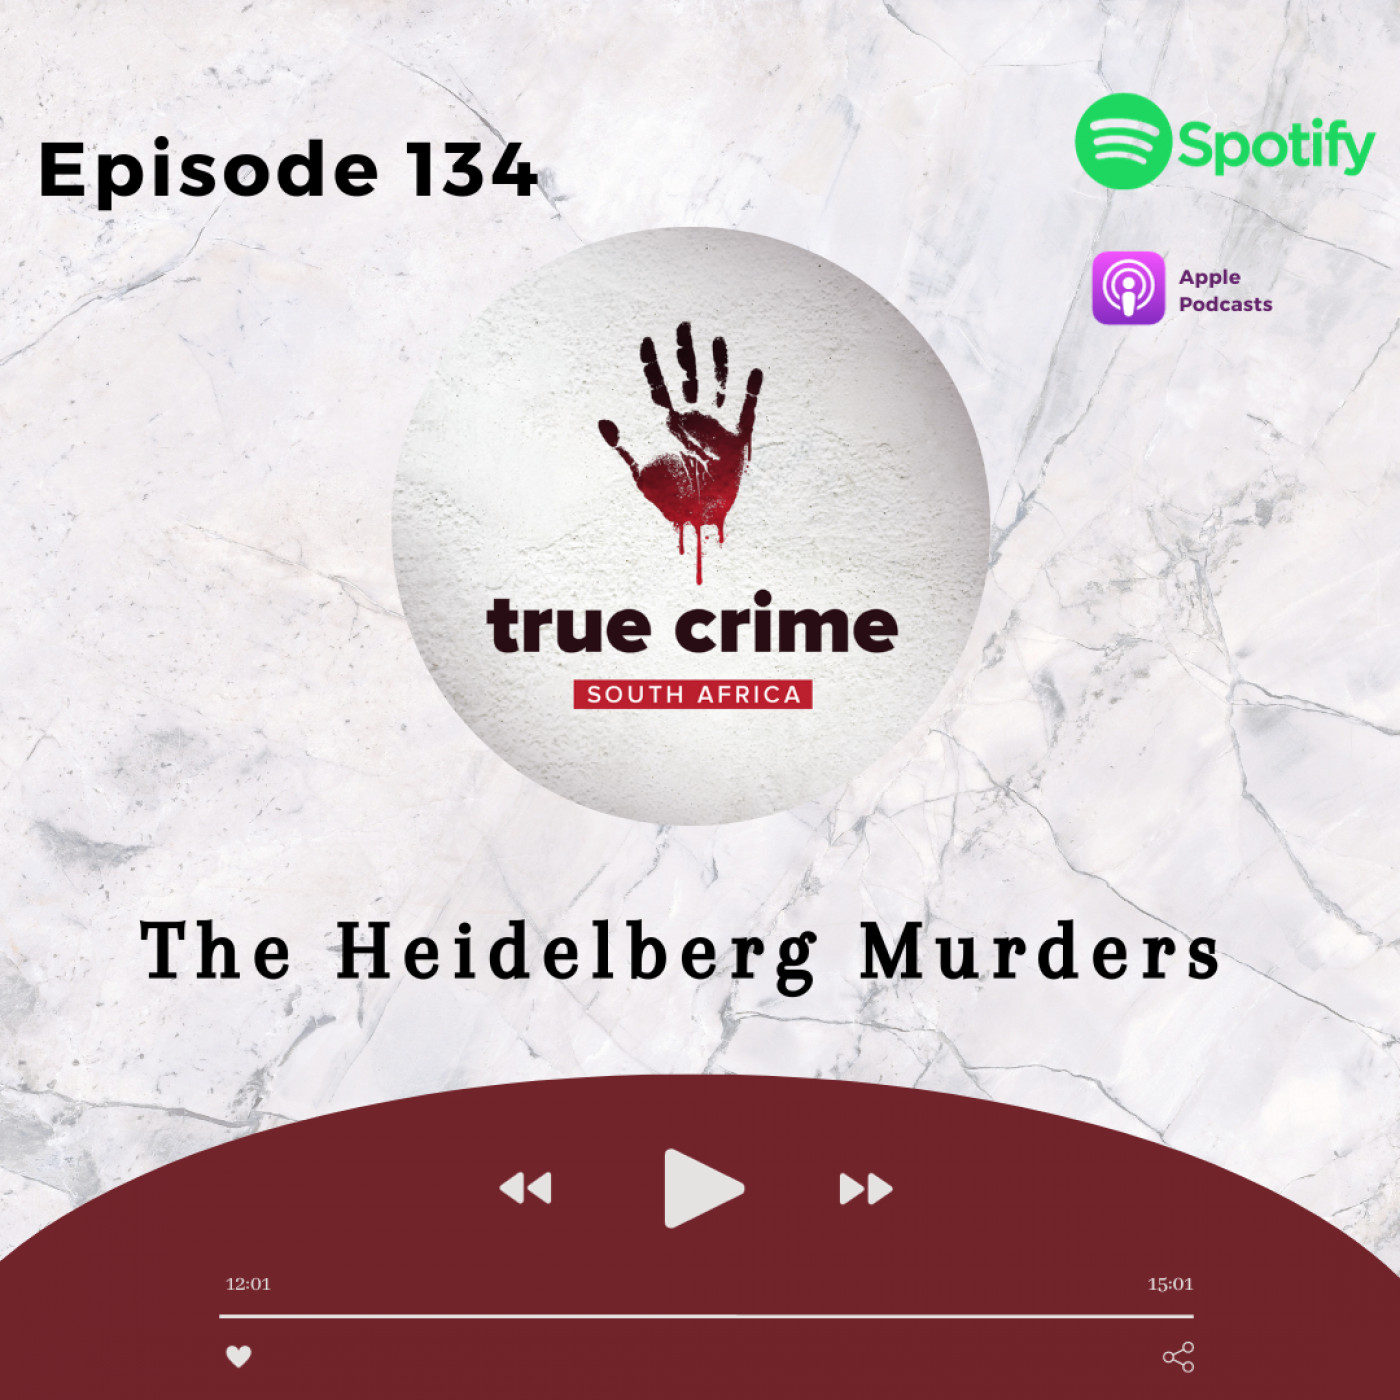 Episode 134 The Heidelberg Murders